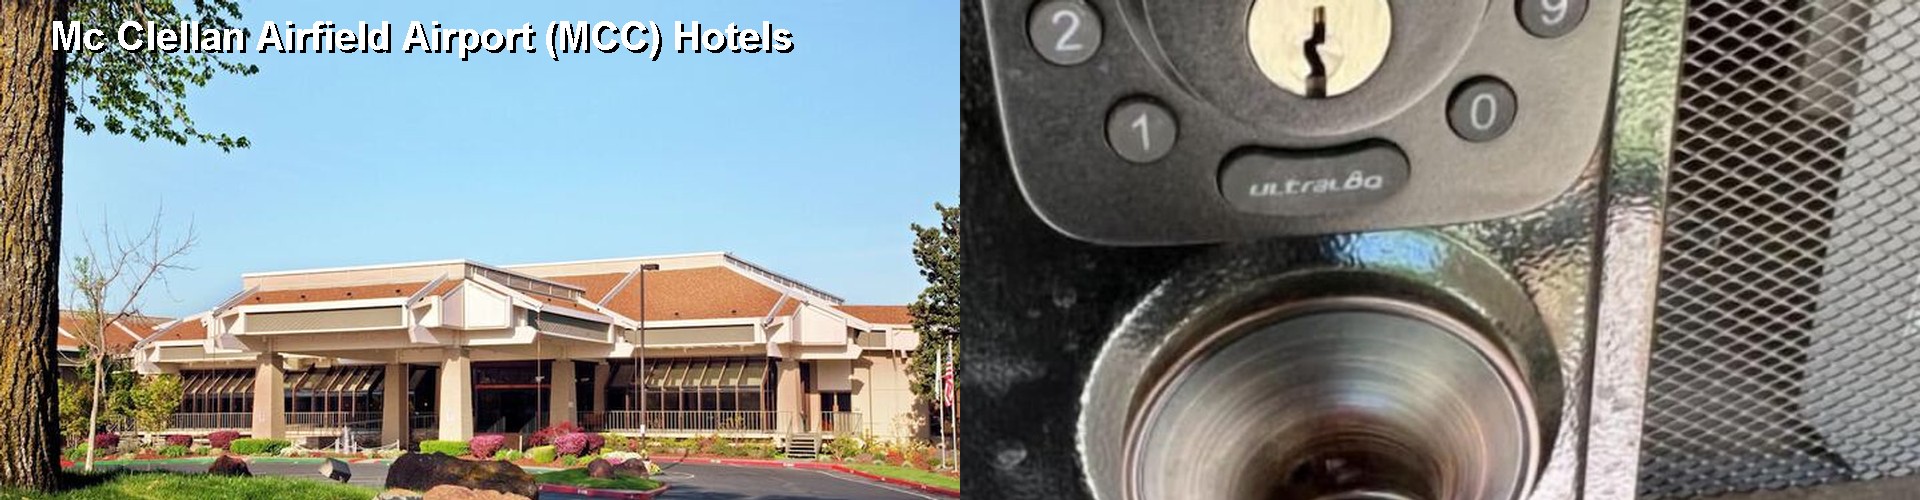 2 Best Hotels near Mc Clellan Airfield Airport (MCC)